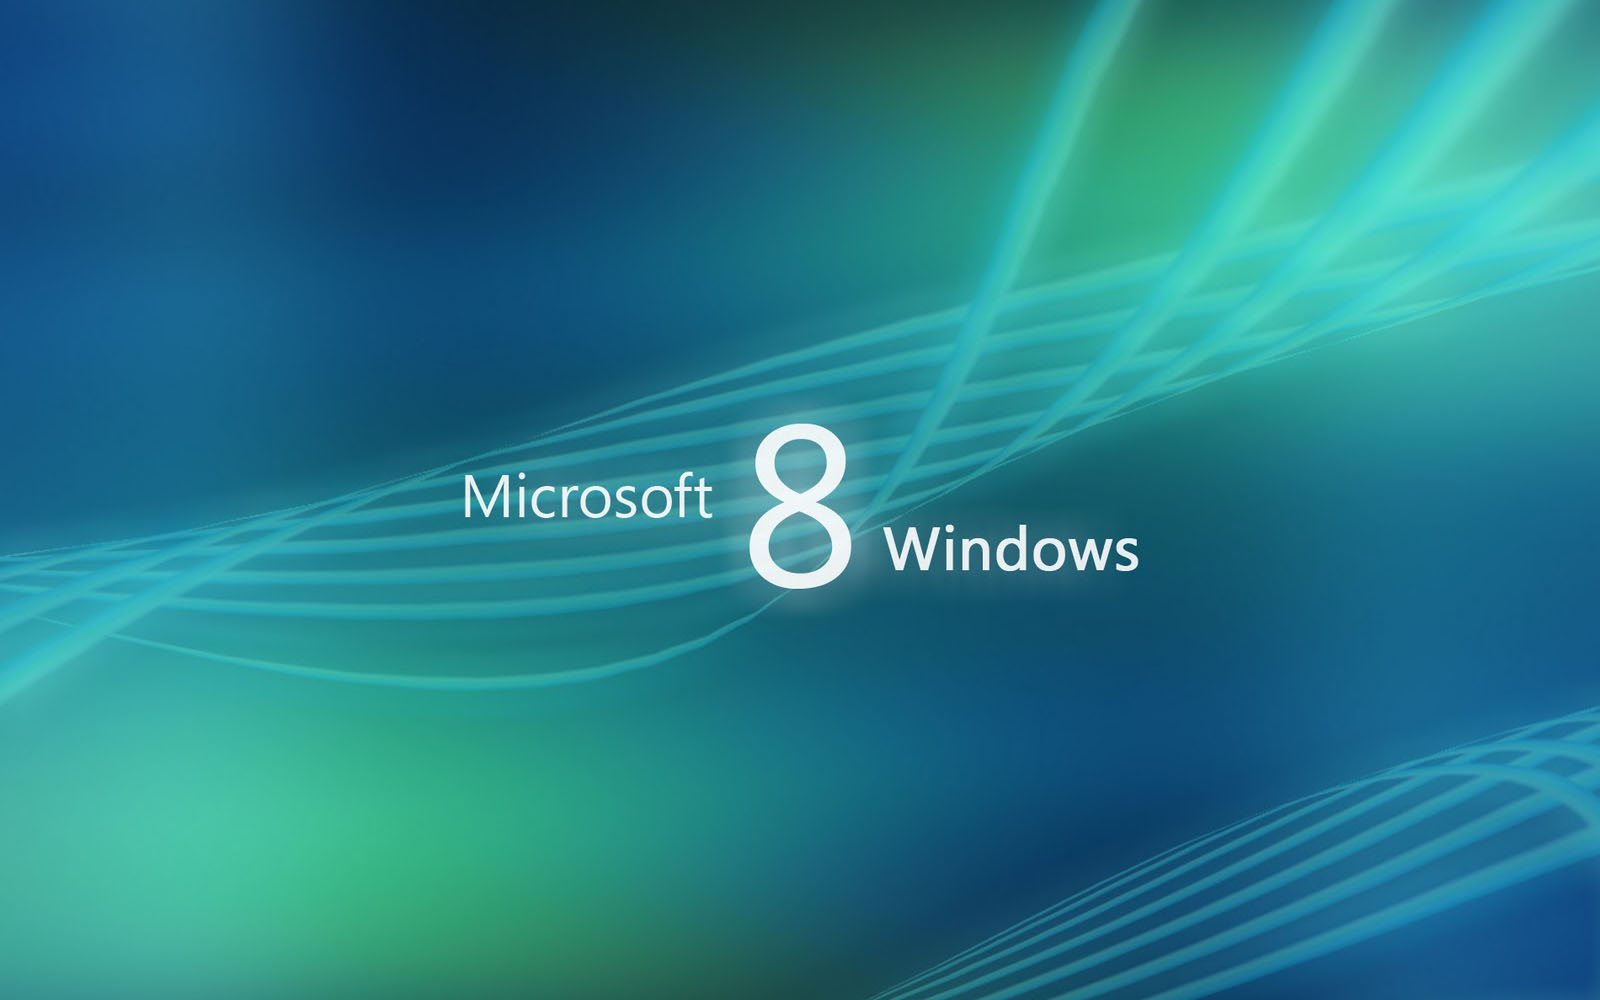 Free download The Windows 8 Themes Windows 8 Latest Desktop Background